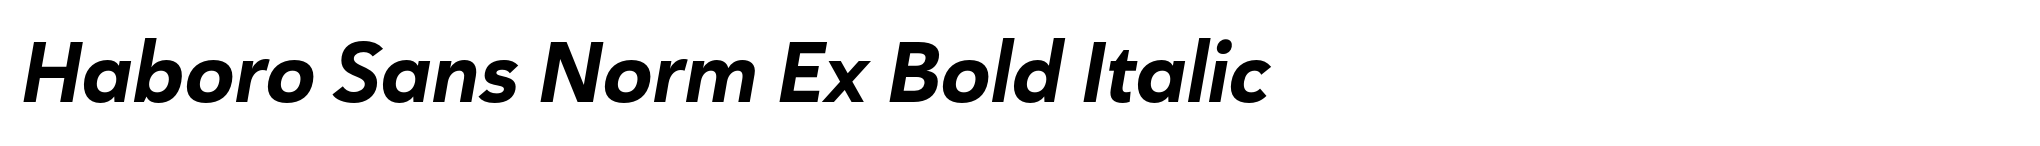 Haboro Sans Norm Ex Bold Italic image